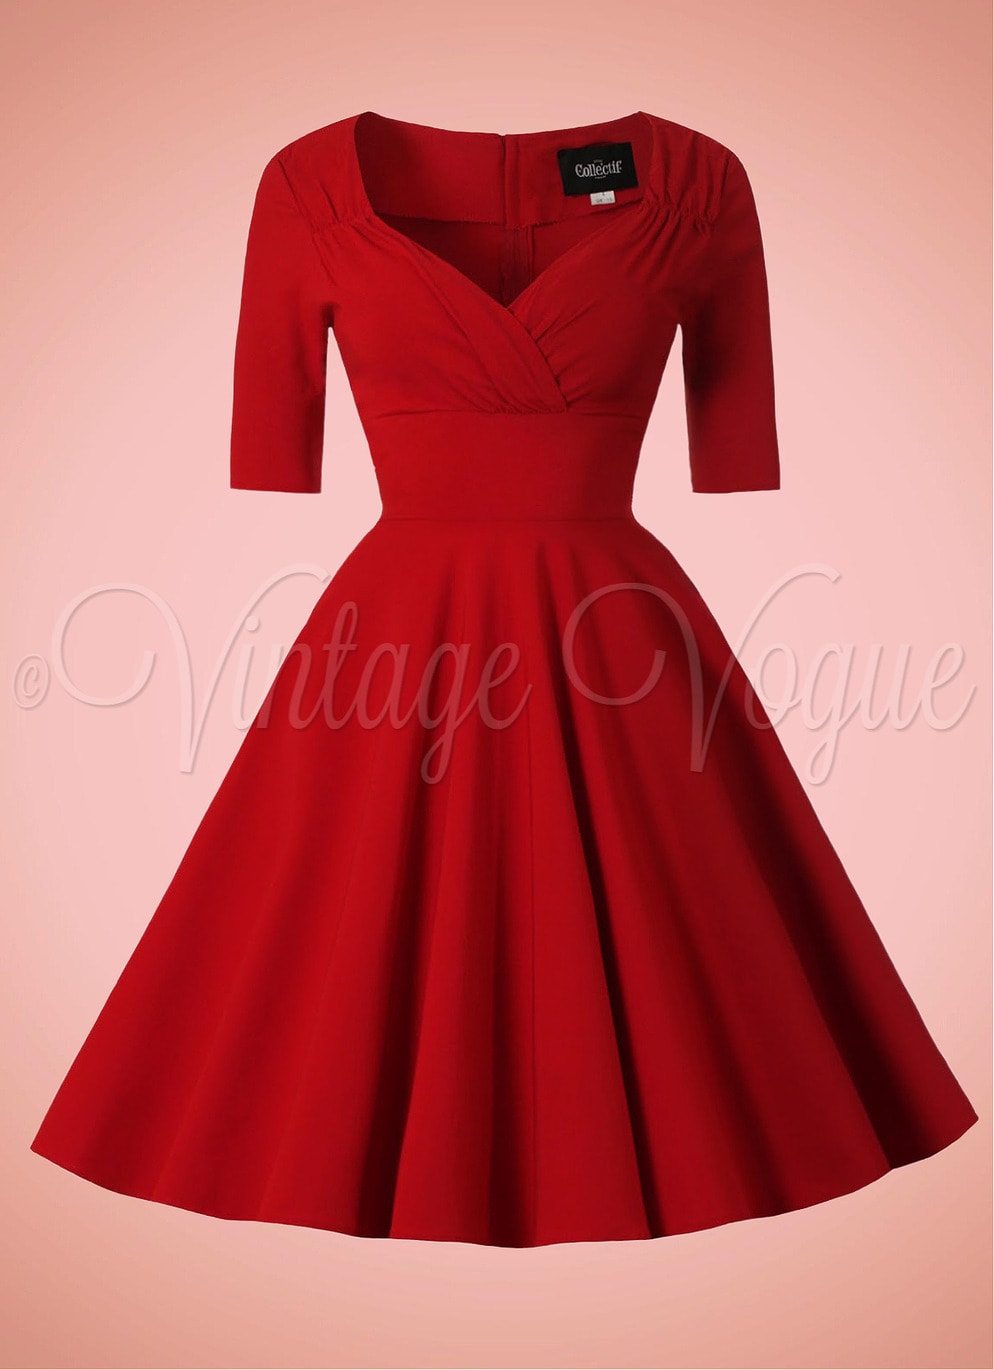 Collectif 50's Vintage Retro Pin-Up Swing Kleid Trixie Doll Dress in Rot 50er Jahre Petticoat Damenkleid Elegant Sexy Stilvoll Abendkleid Cocktailkleid Uni